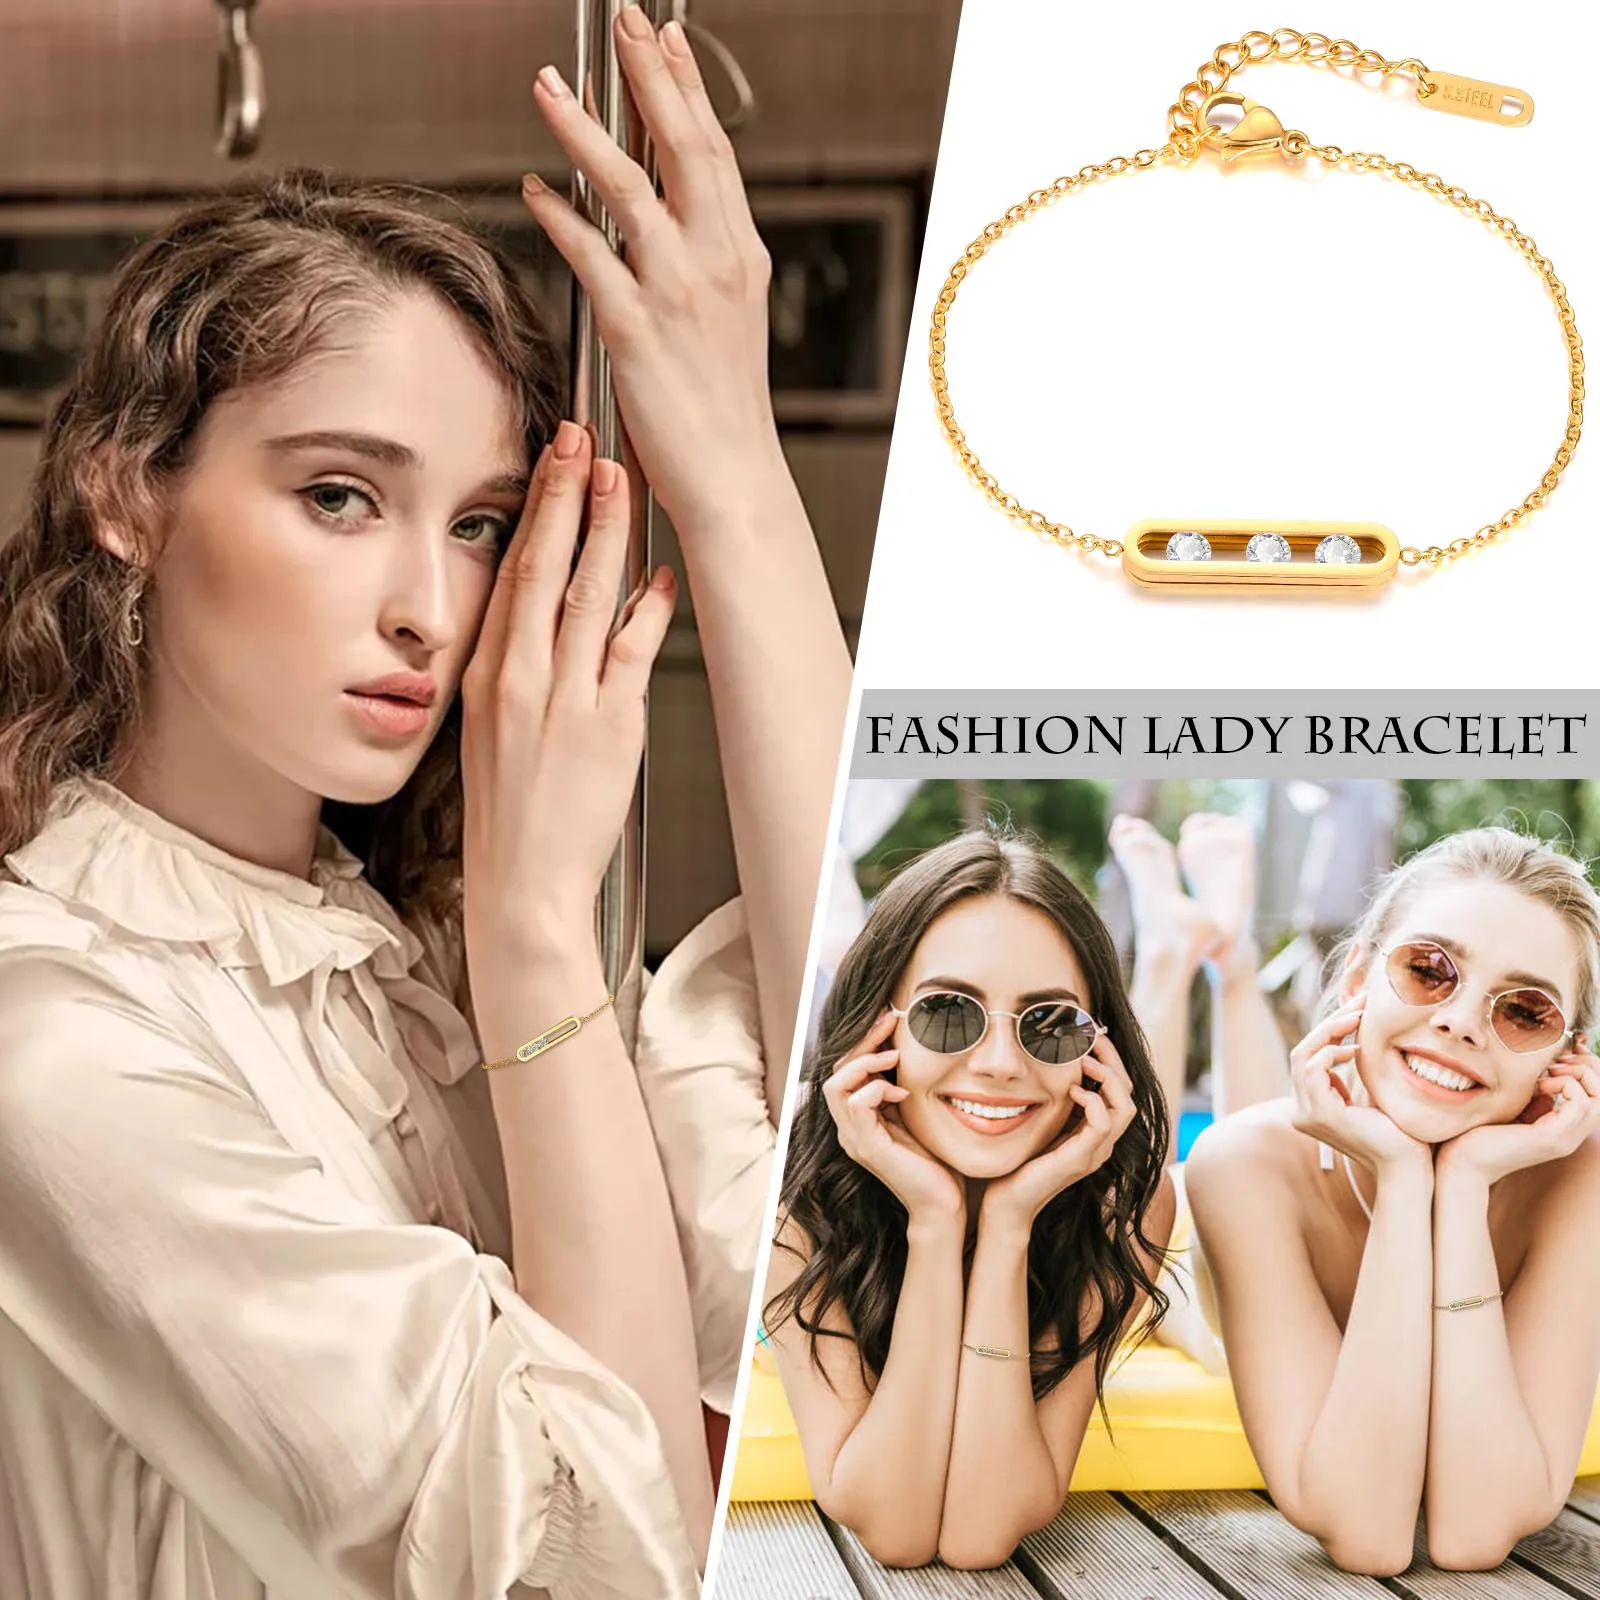 Thin Luxury Round Bracelets - 2MM Dubai Gold Bangles Women Fashion Jewelry  1 PC | eBay